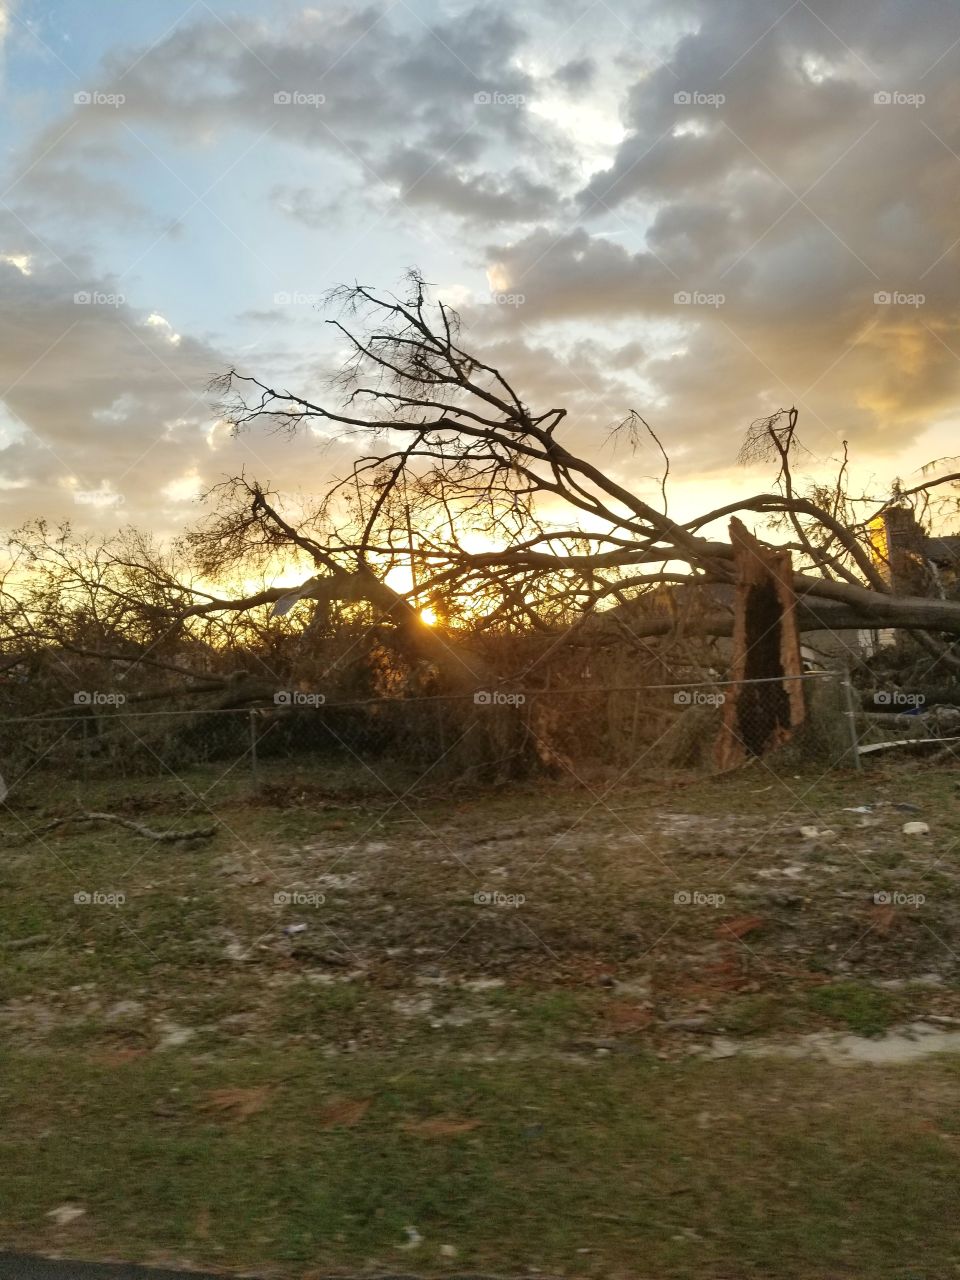 Hurricane Michael destruction in Panama City, Florida